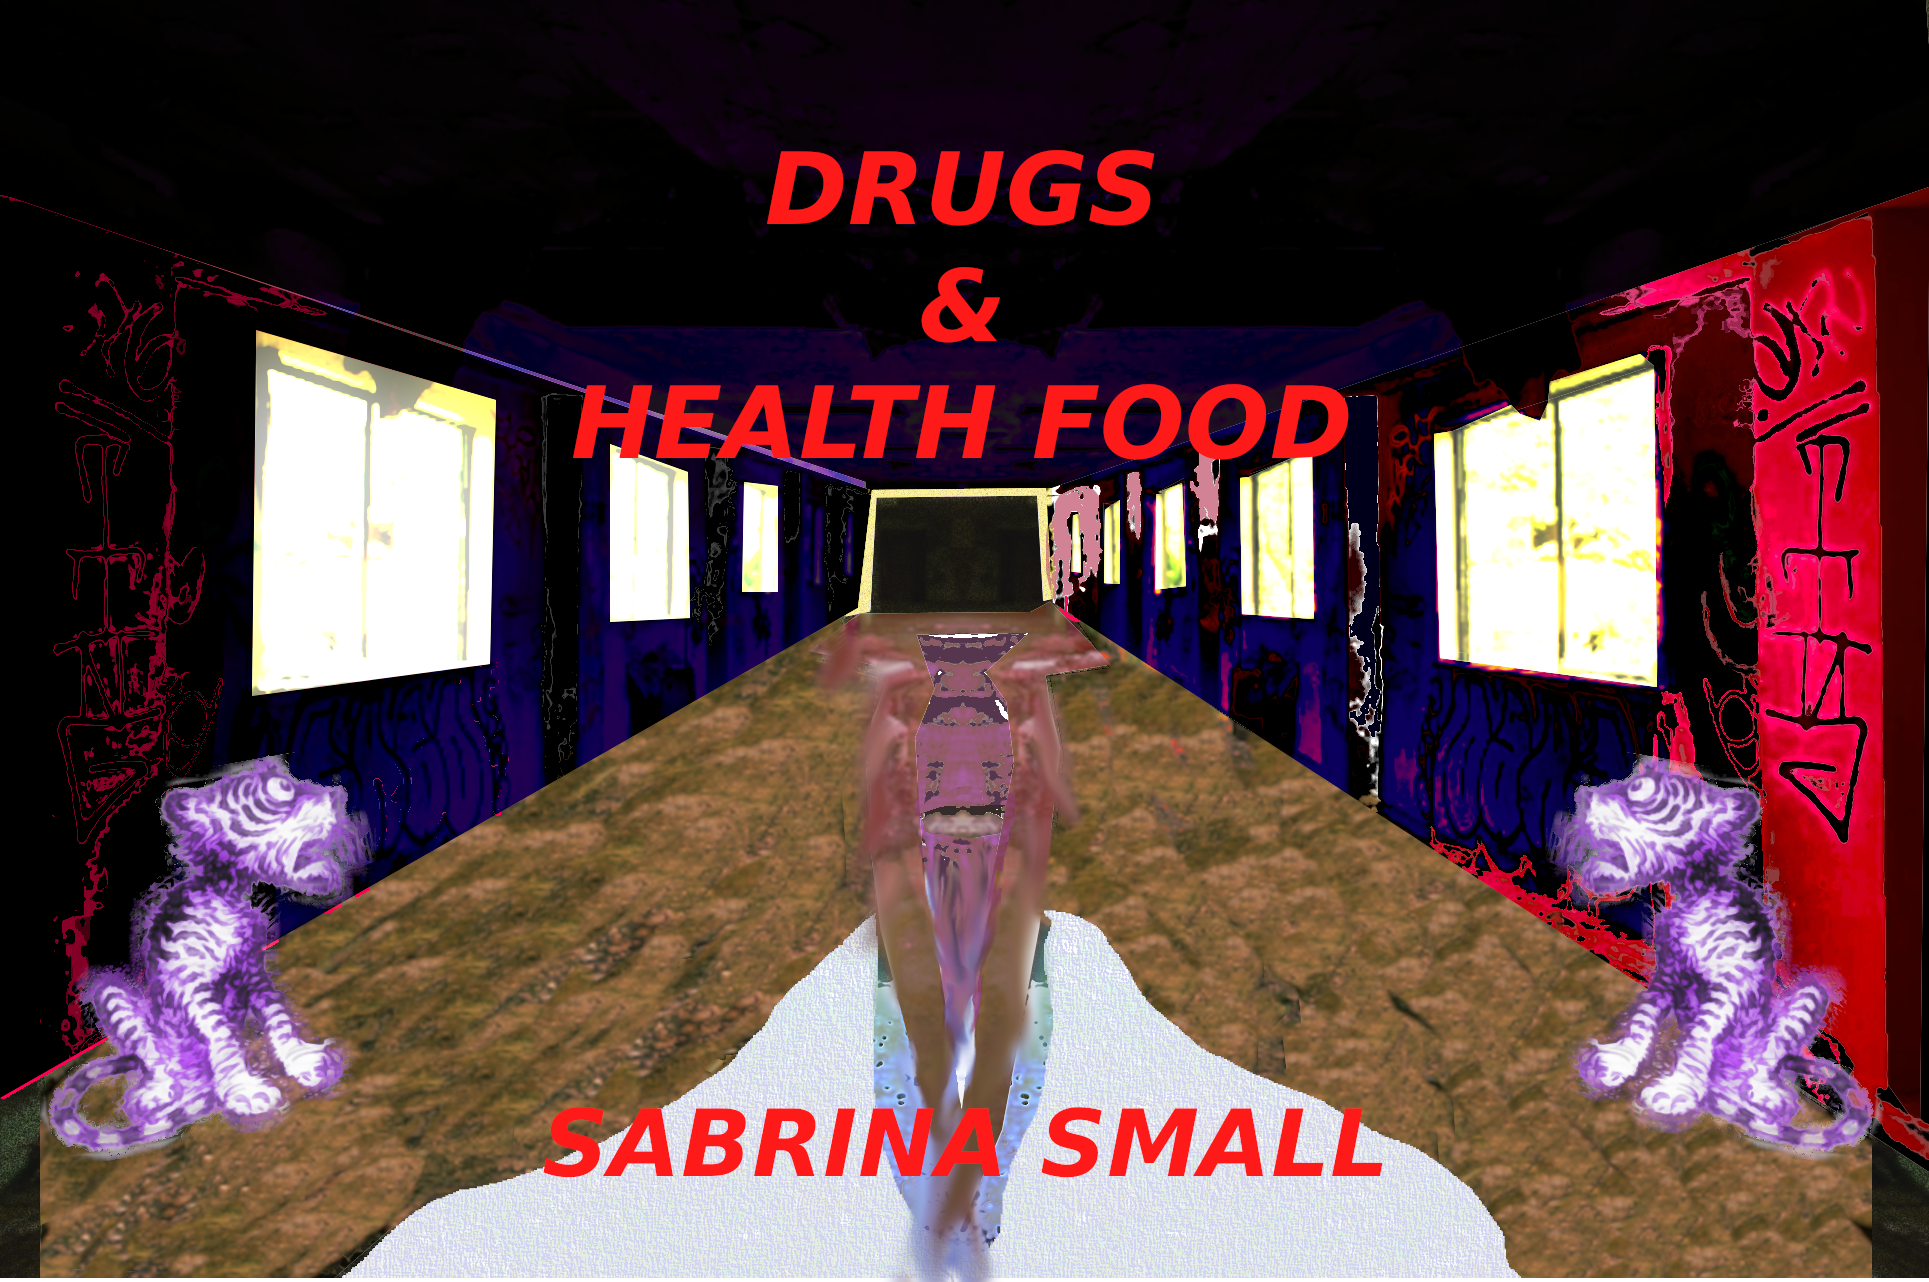 Drugs & Health Food, by Sabrina Small